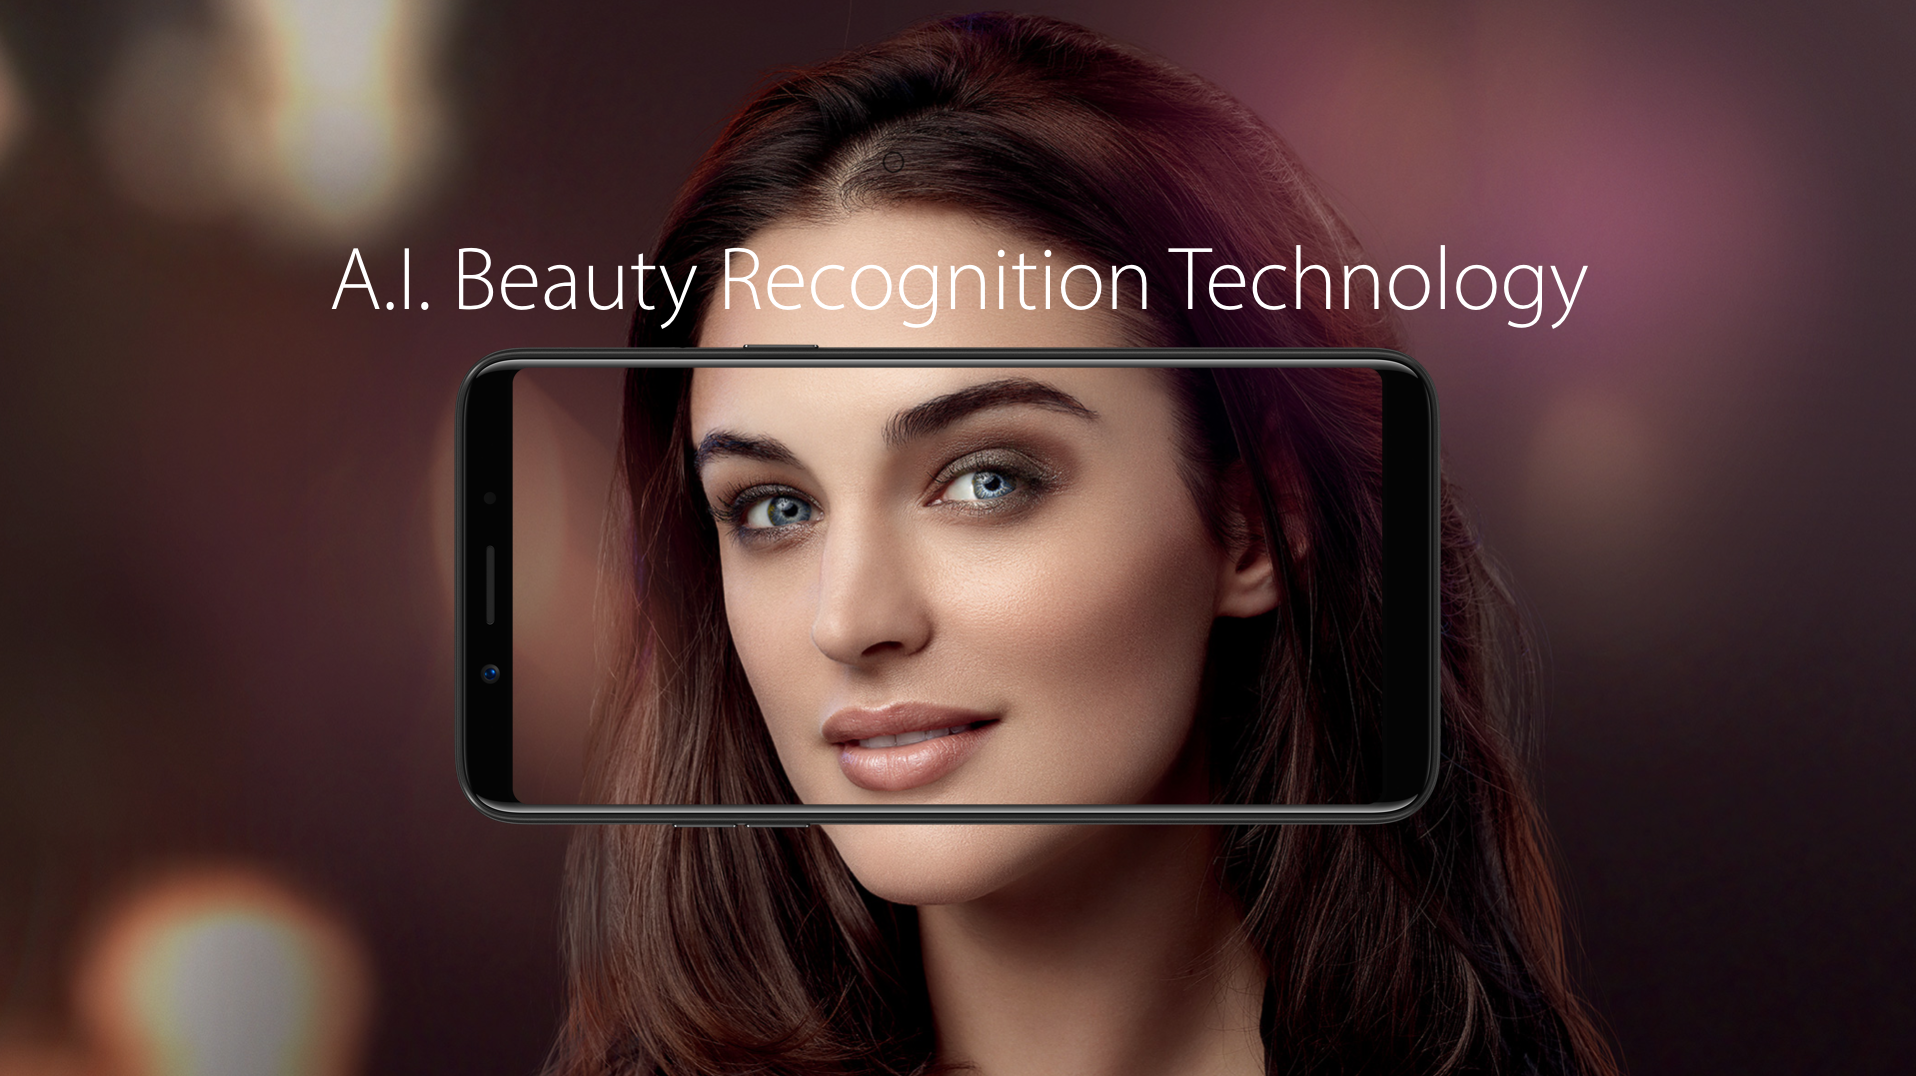 A.I. Beauty Recognition Technology